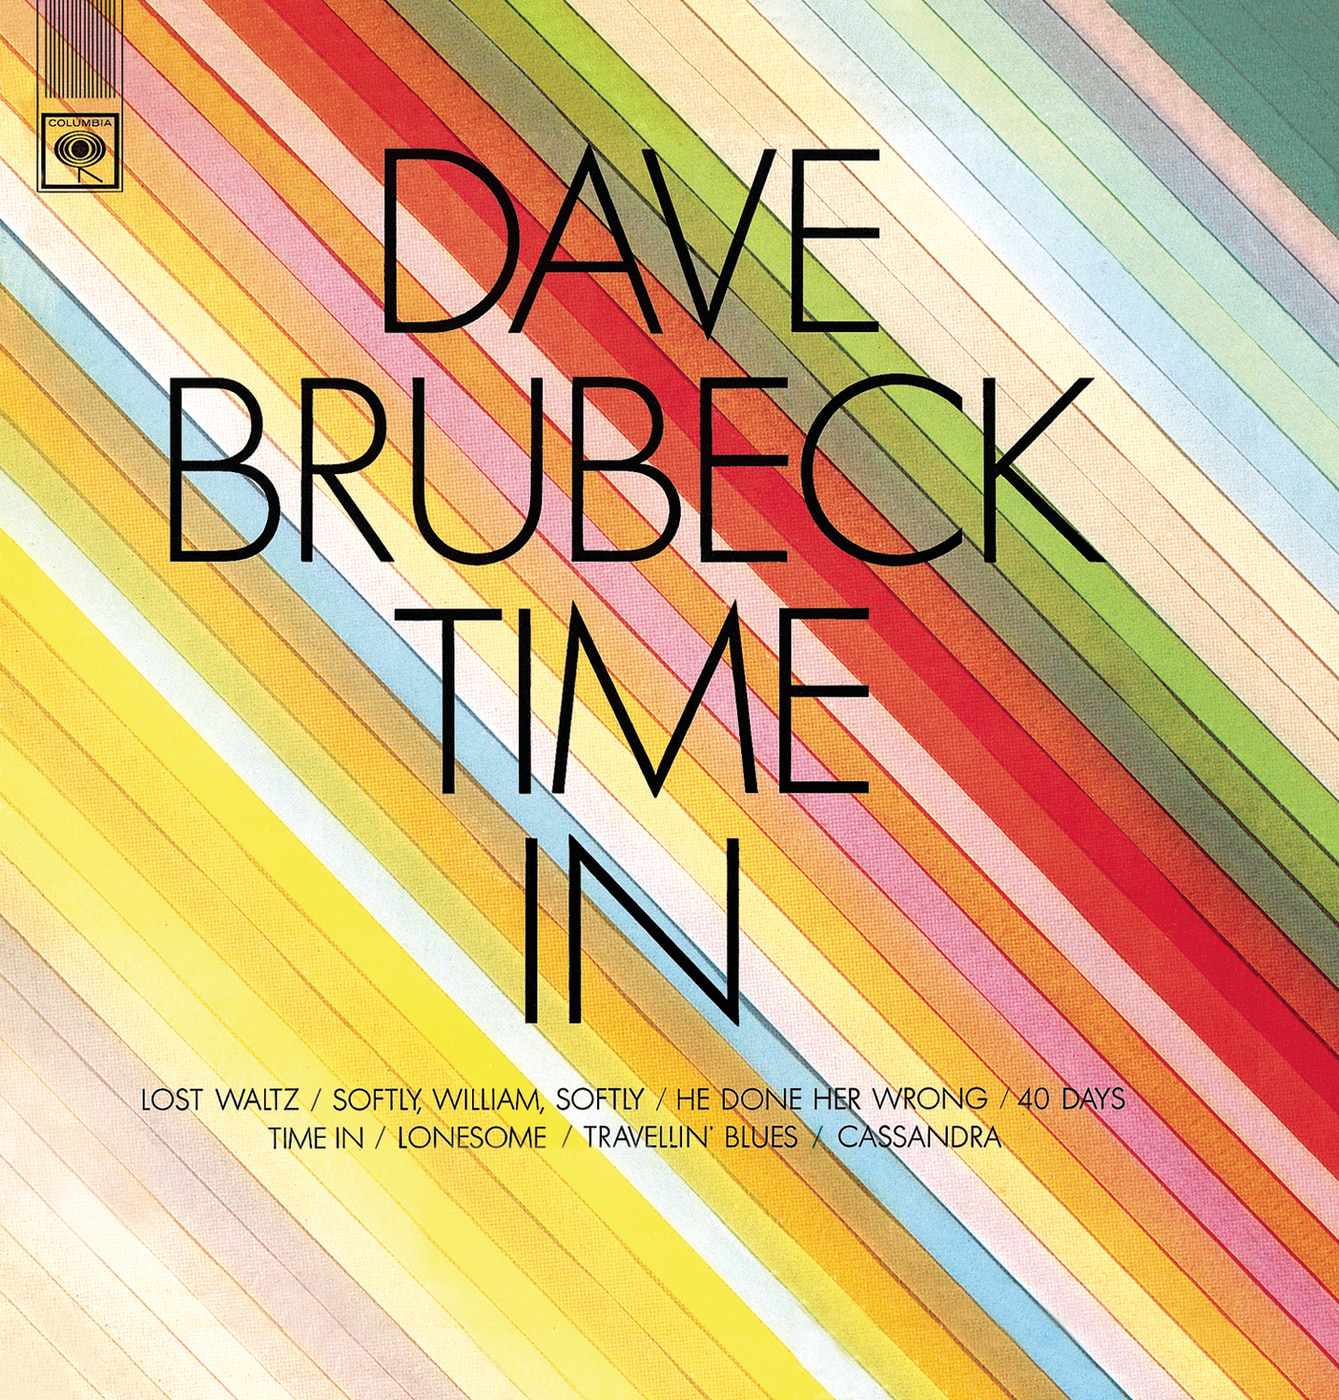 The Dave Brubeck Quartet-Theme from Elementals